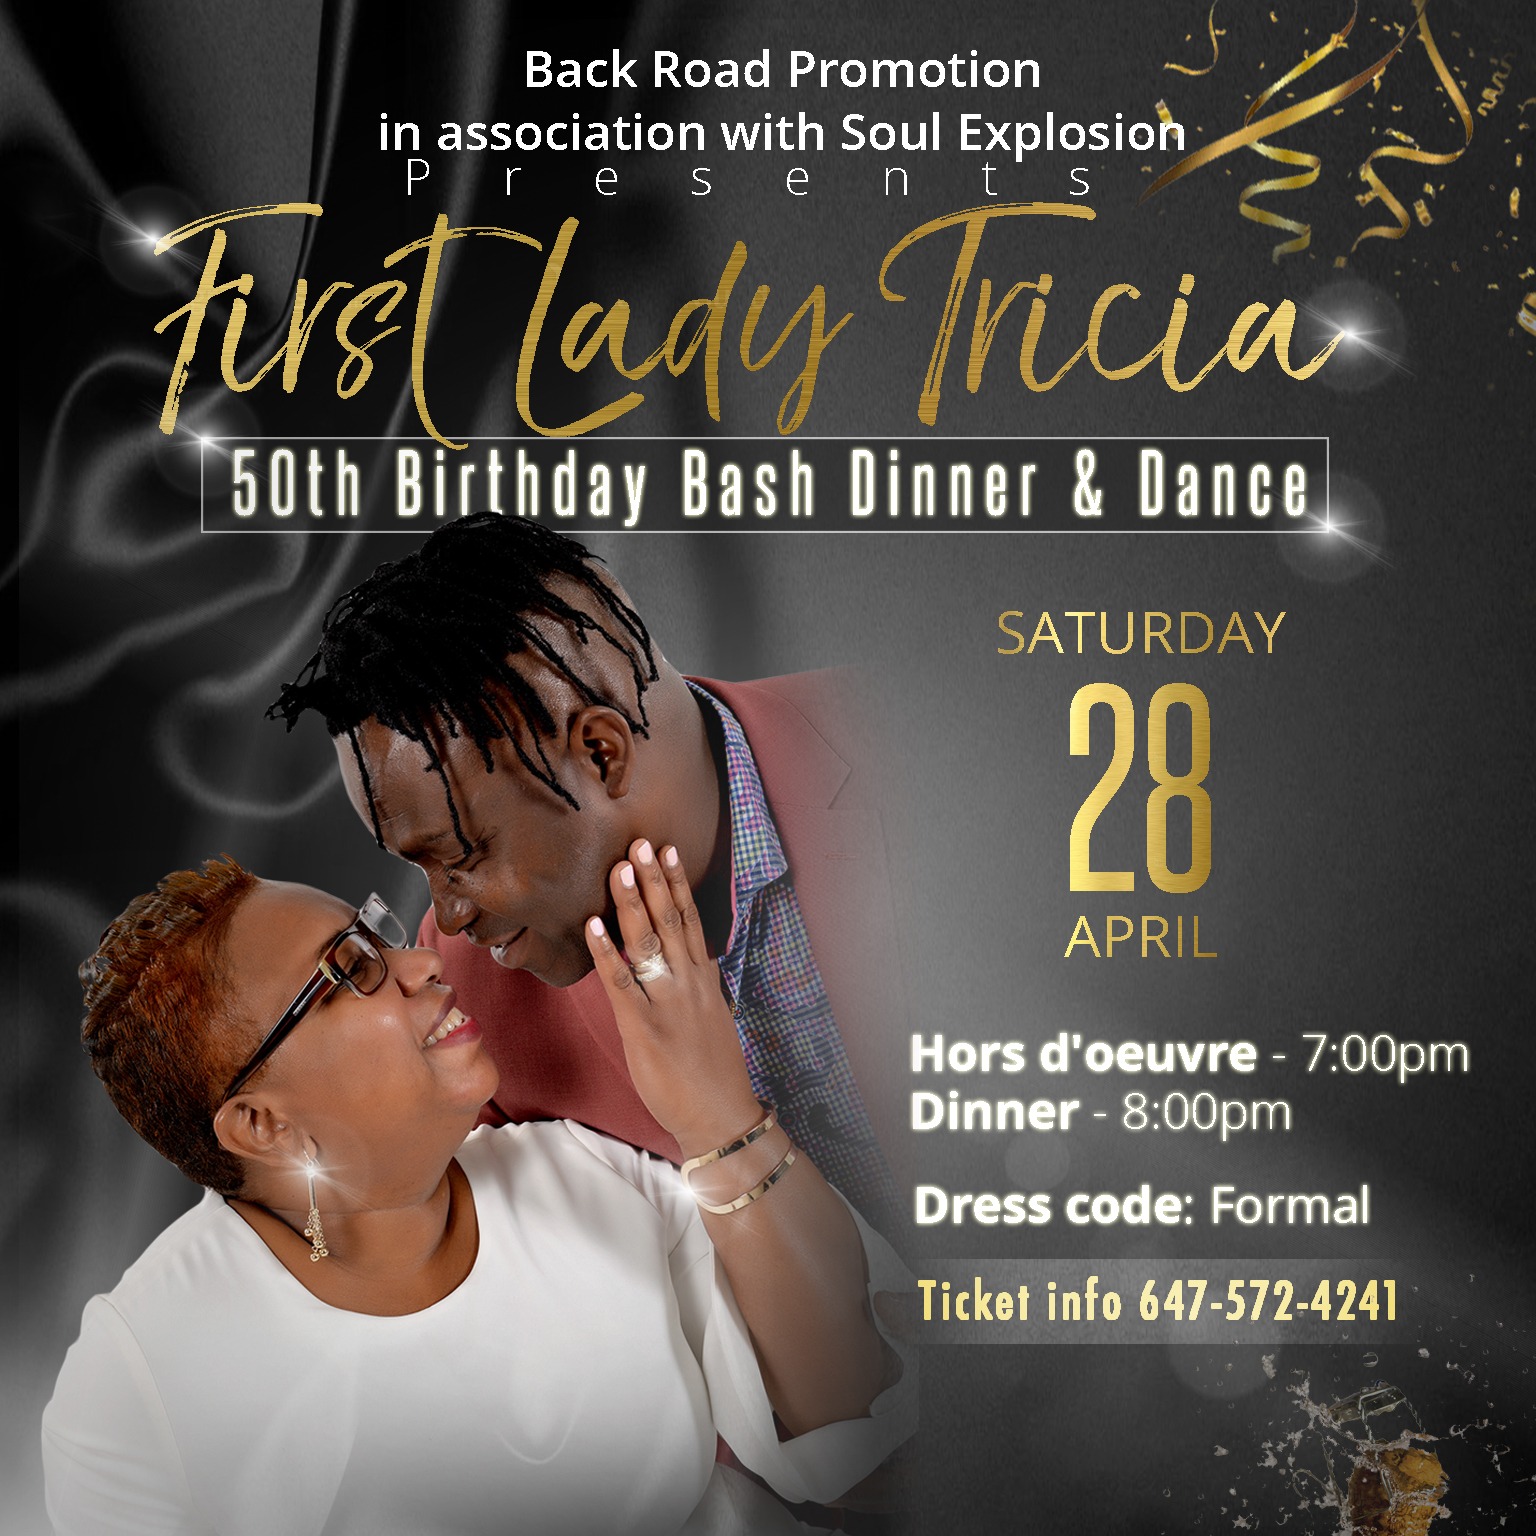 First Lady Tricia - 50th Birthday bash Dinner & Dance